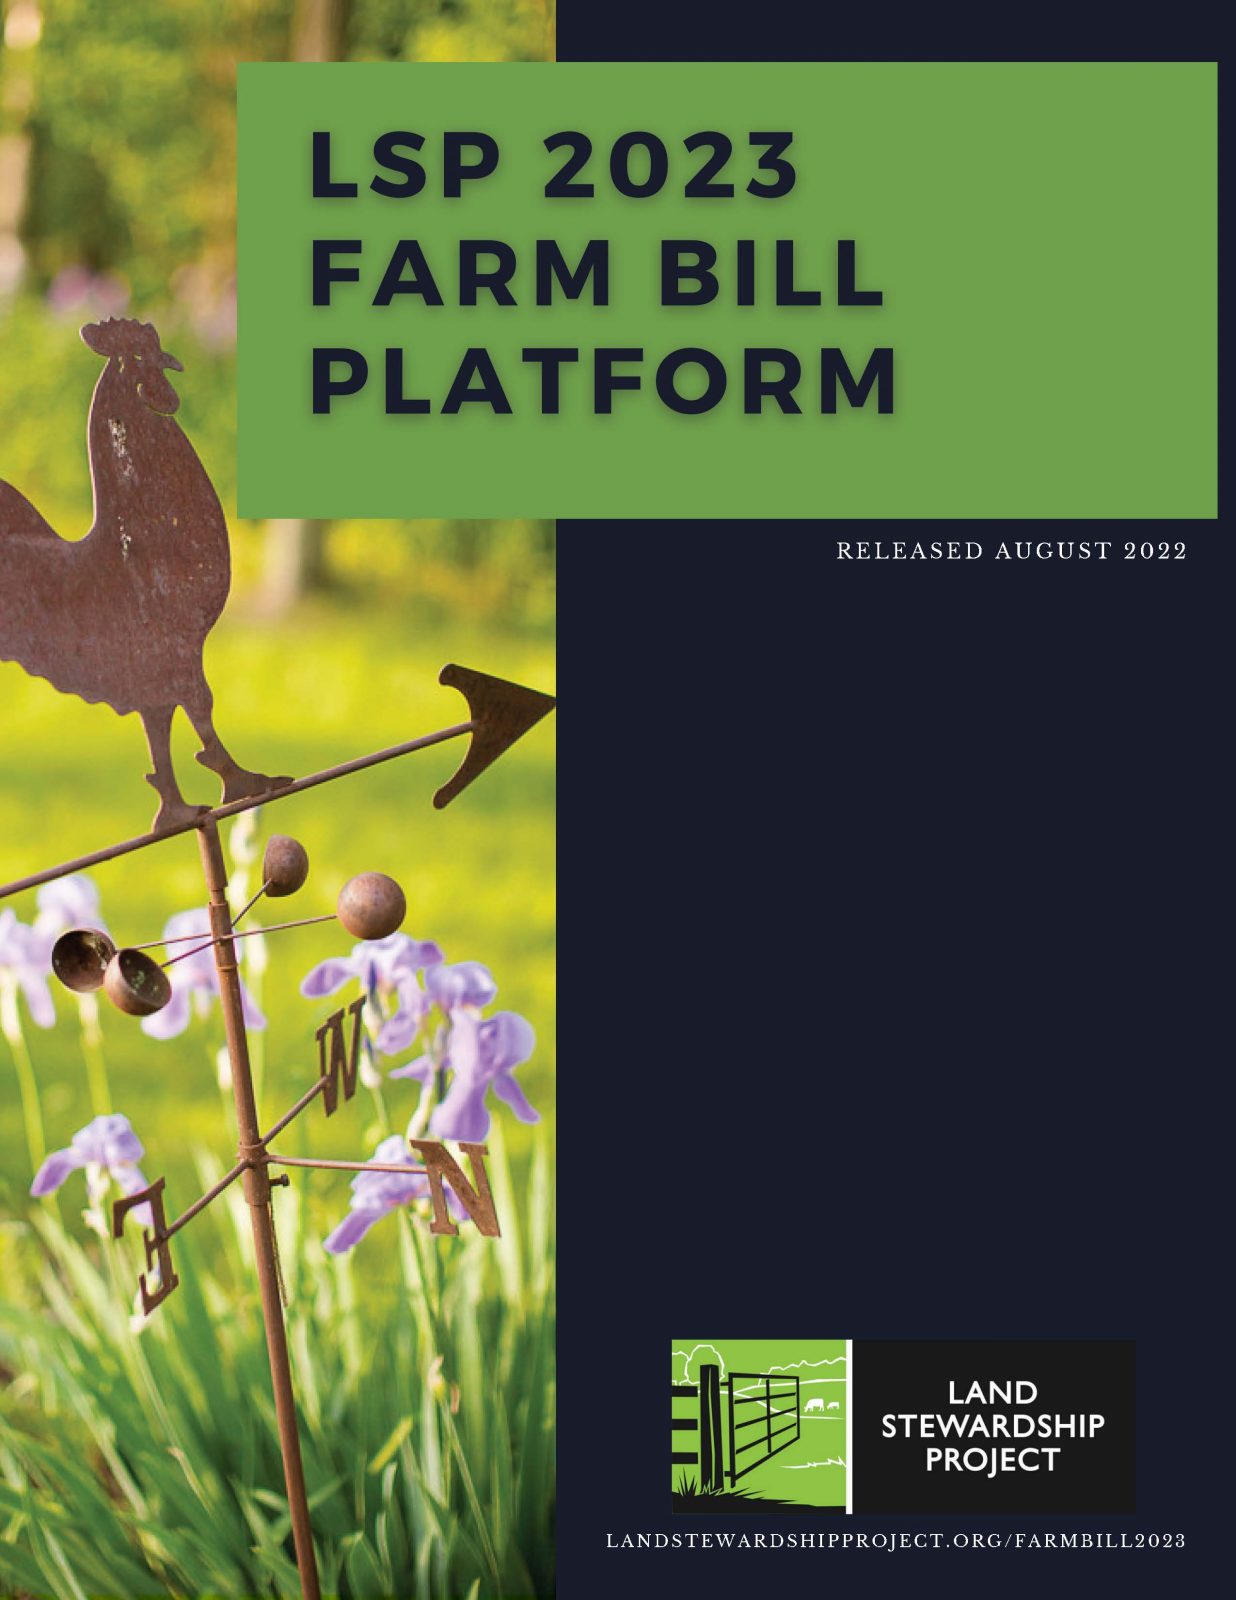 LSP Platform Calls for Farm Bill that Supports Farmers, Rural